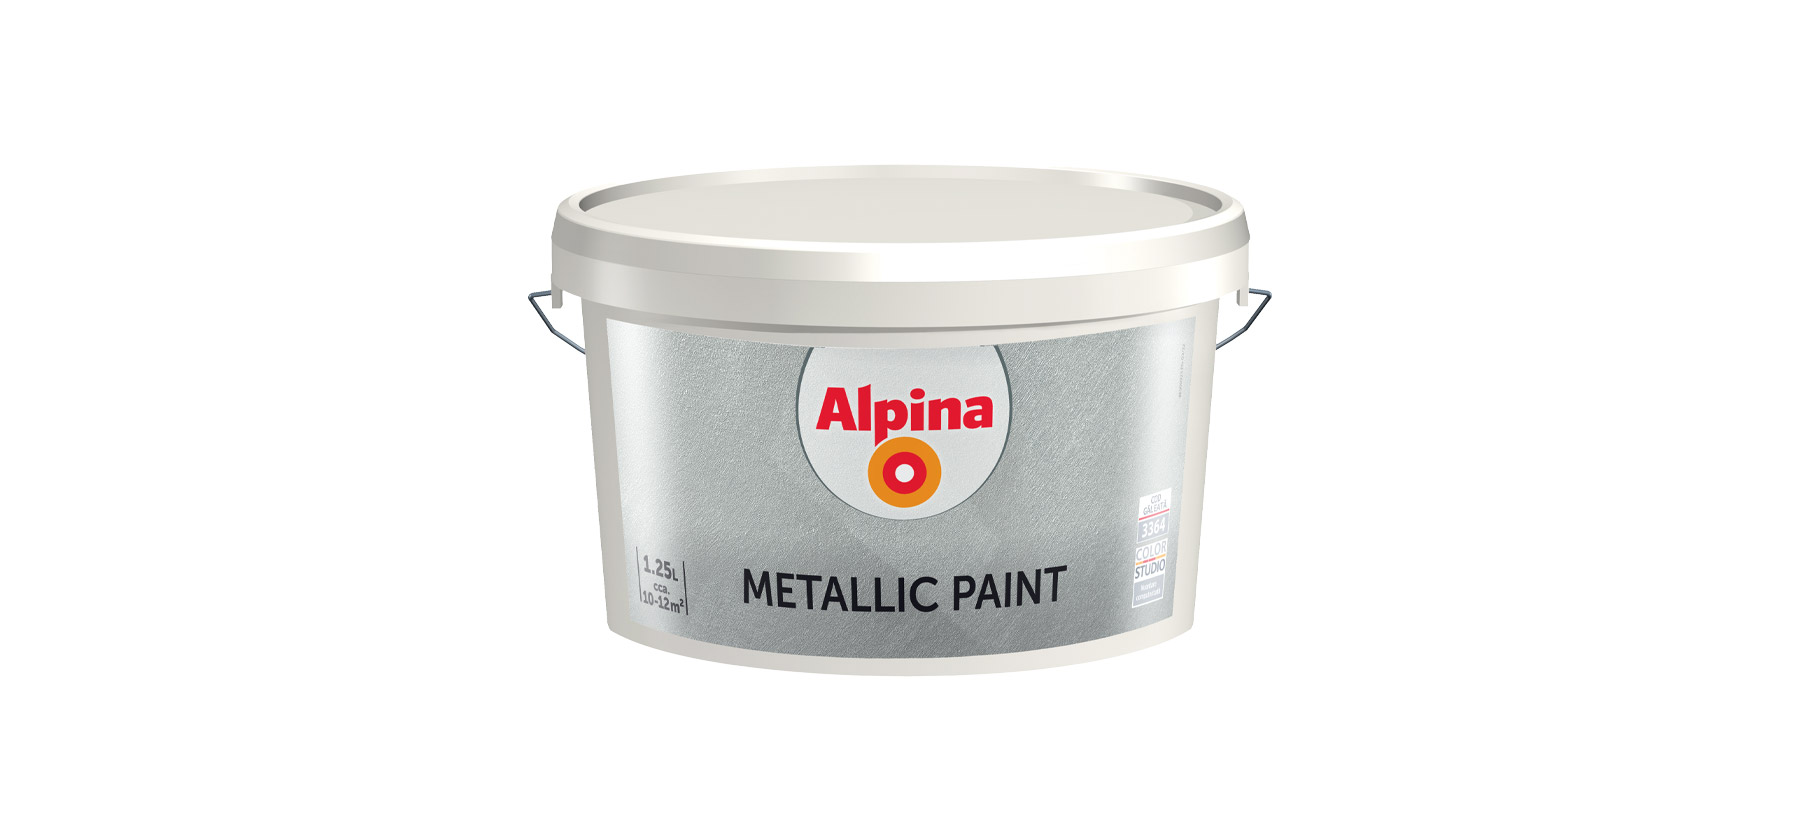 Metalic-Paint-Alpina